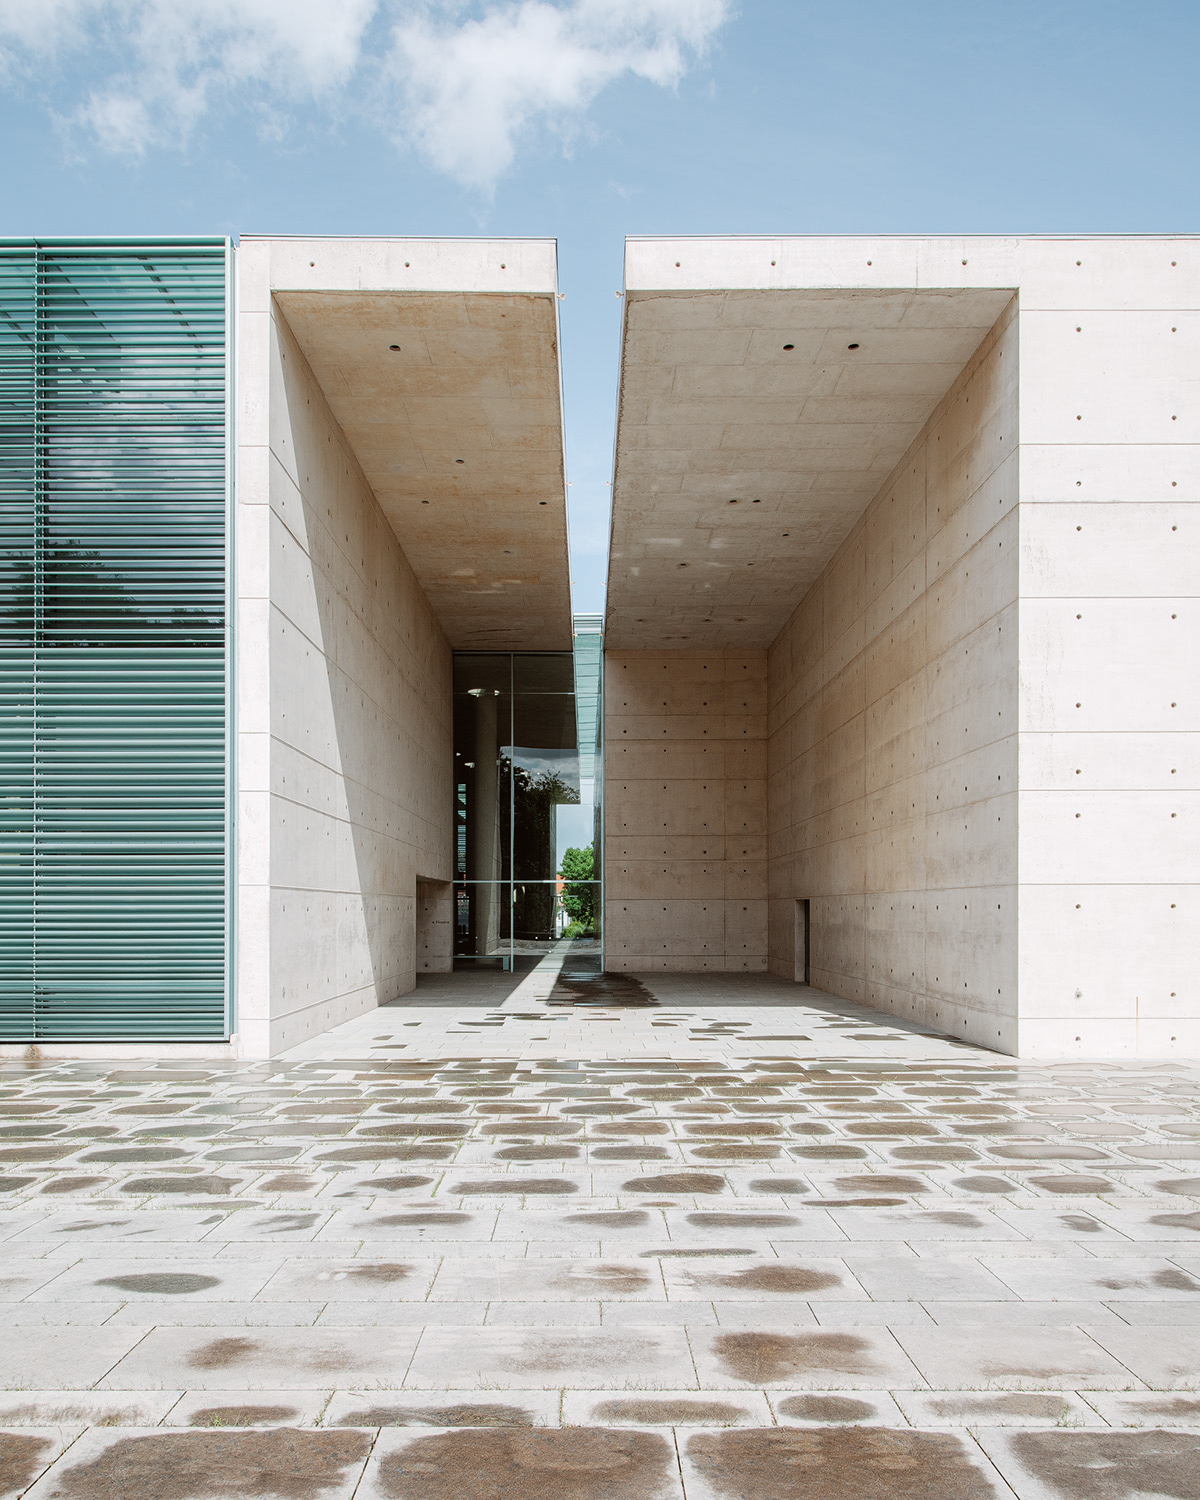 germany Deutschland berlin architektur glas concrete beton Urban modern sci-fi future utopia